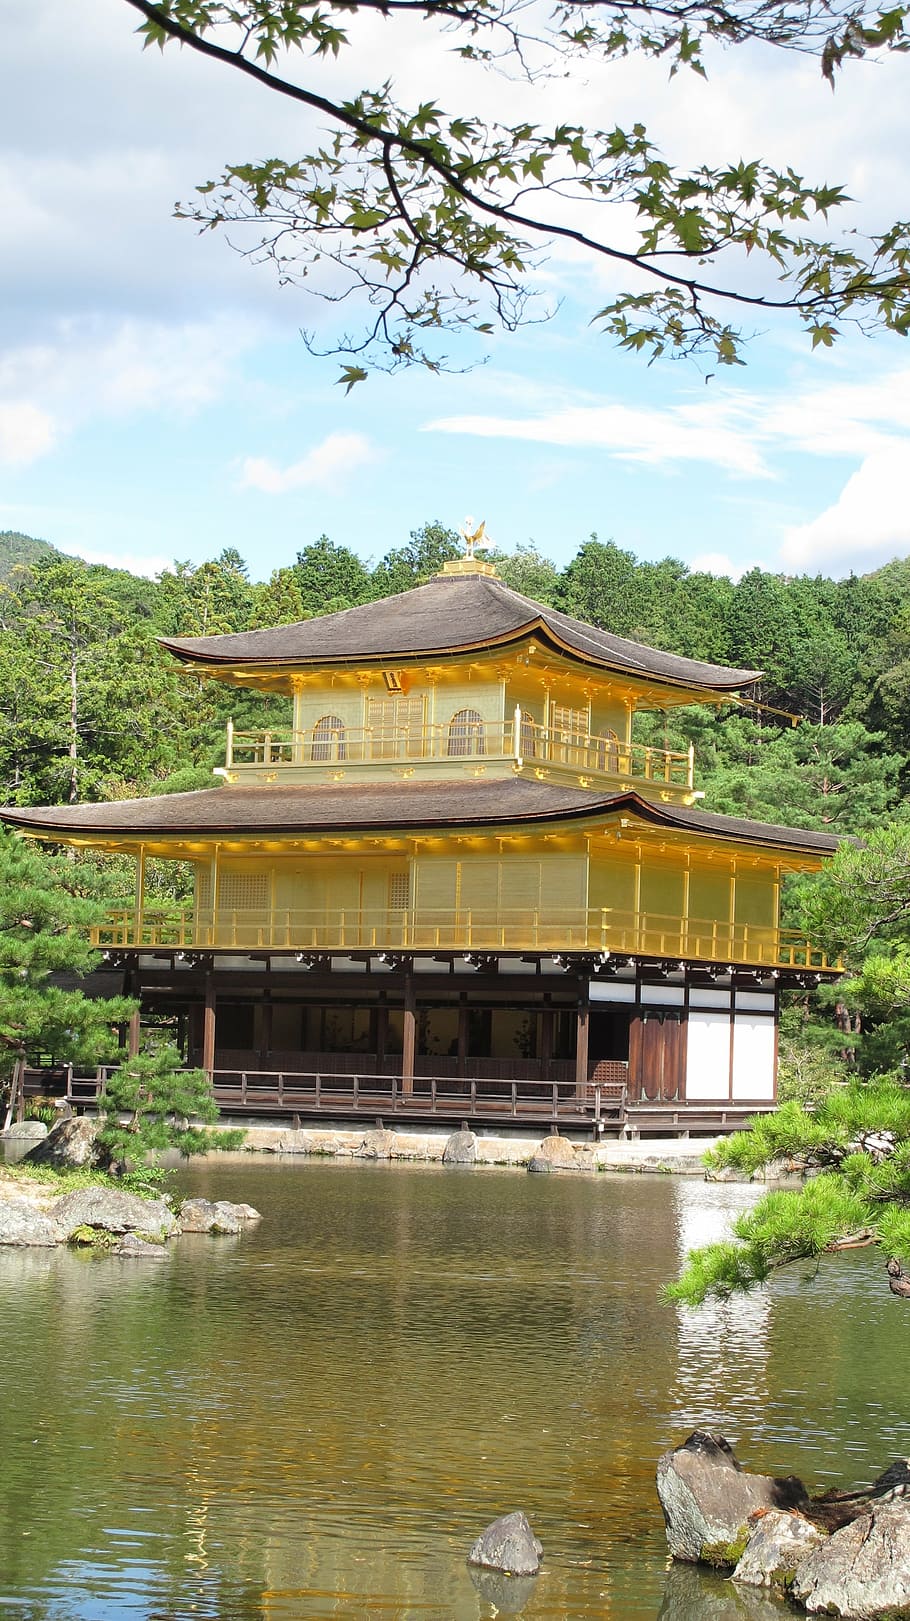 kinkaku-ji, kyoto, japón, templo del pabellón dorado, 鹿苑 寺, 金 閣 寺, 京都, 日本, estructura construida, árbol